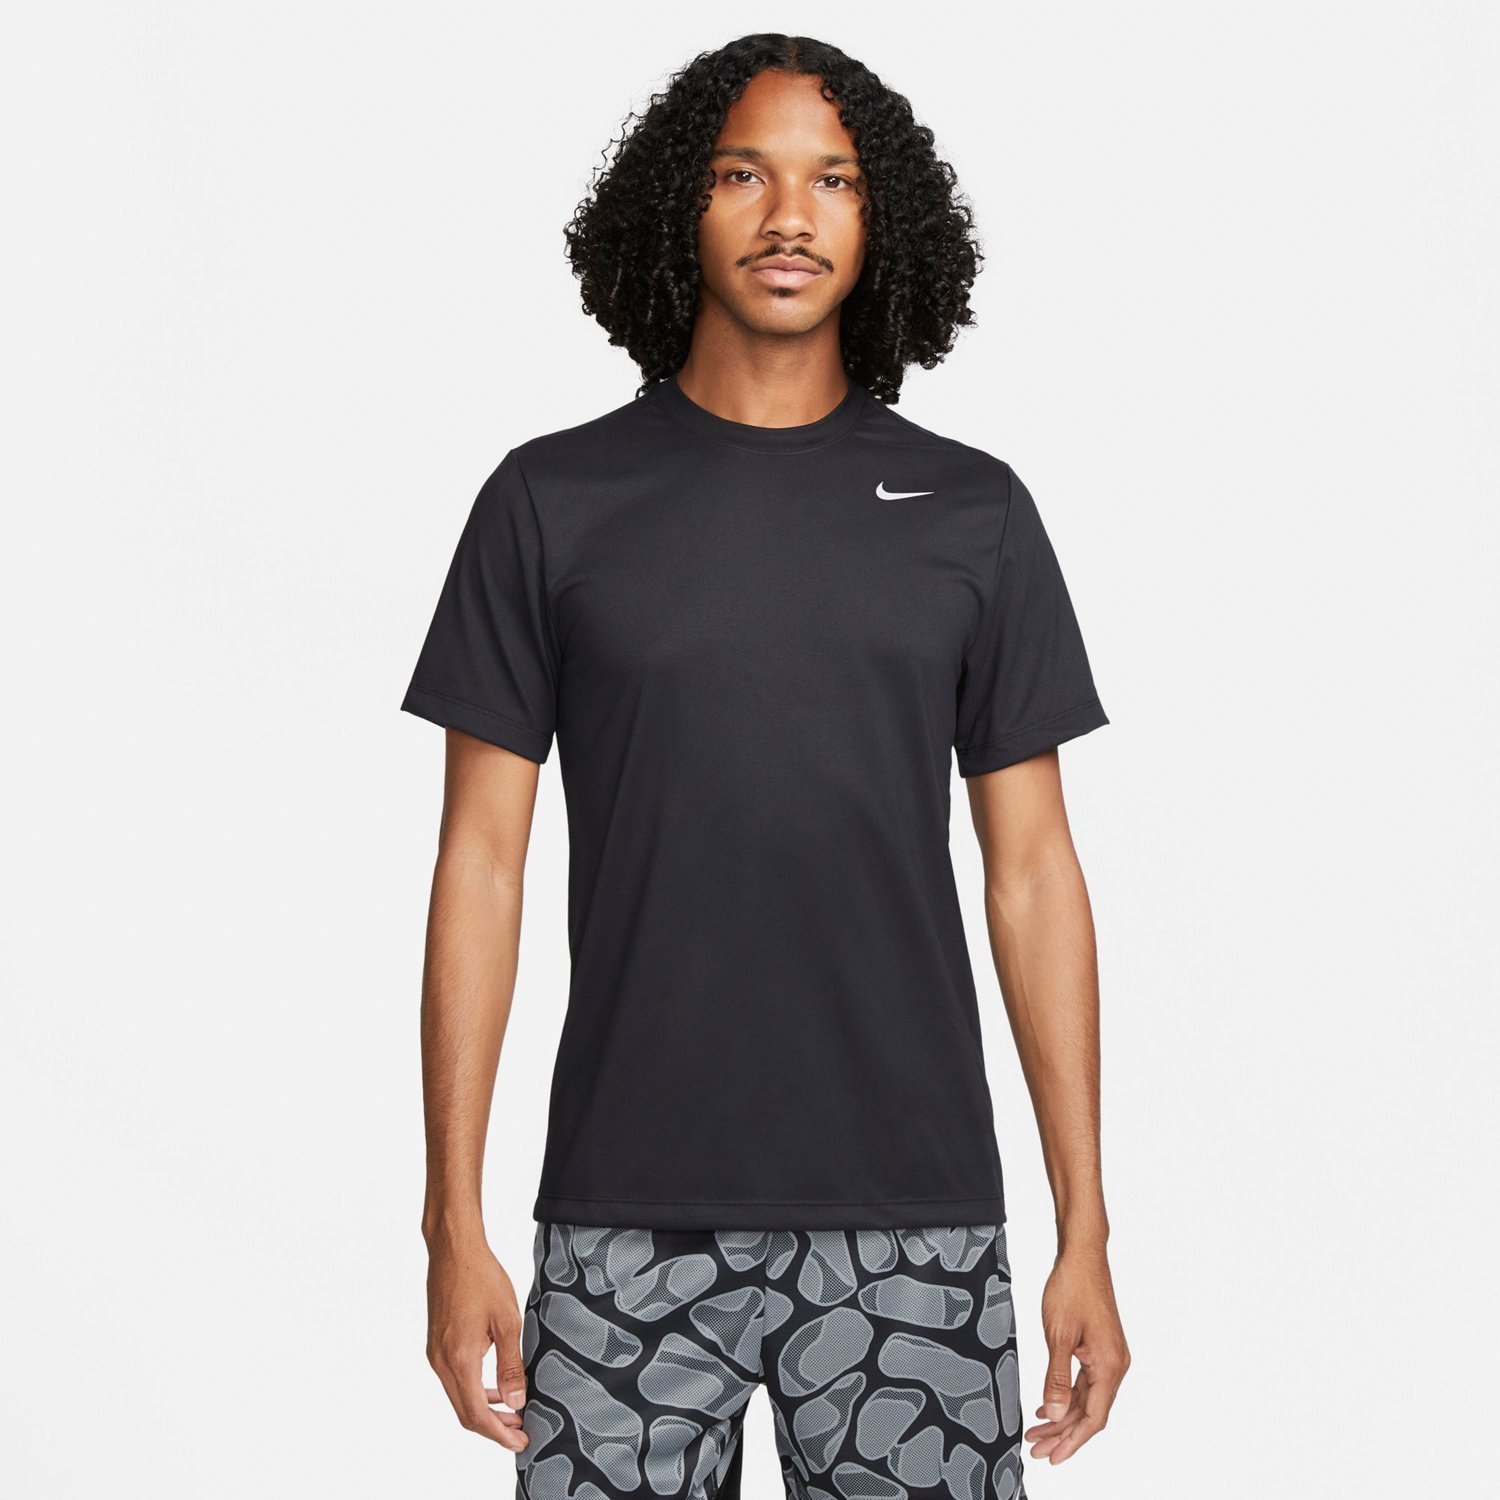 Procent salt Render Nike Men's Dri-FIT Legend Fitness T-shirt | Academy